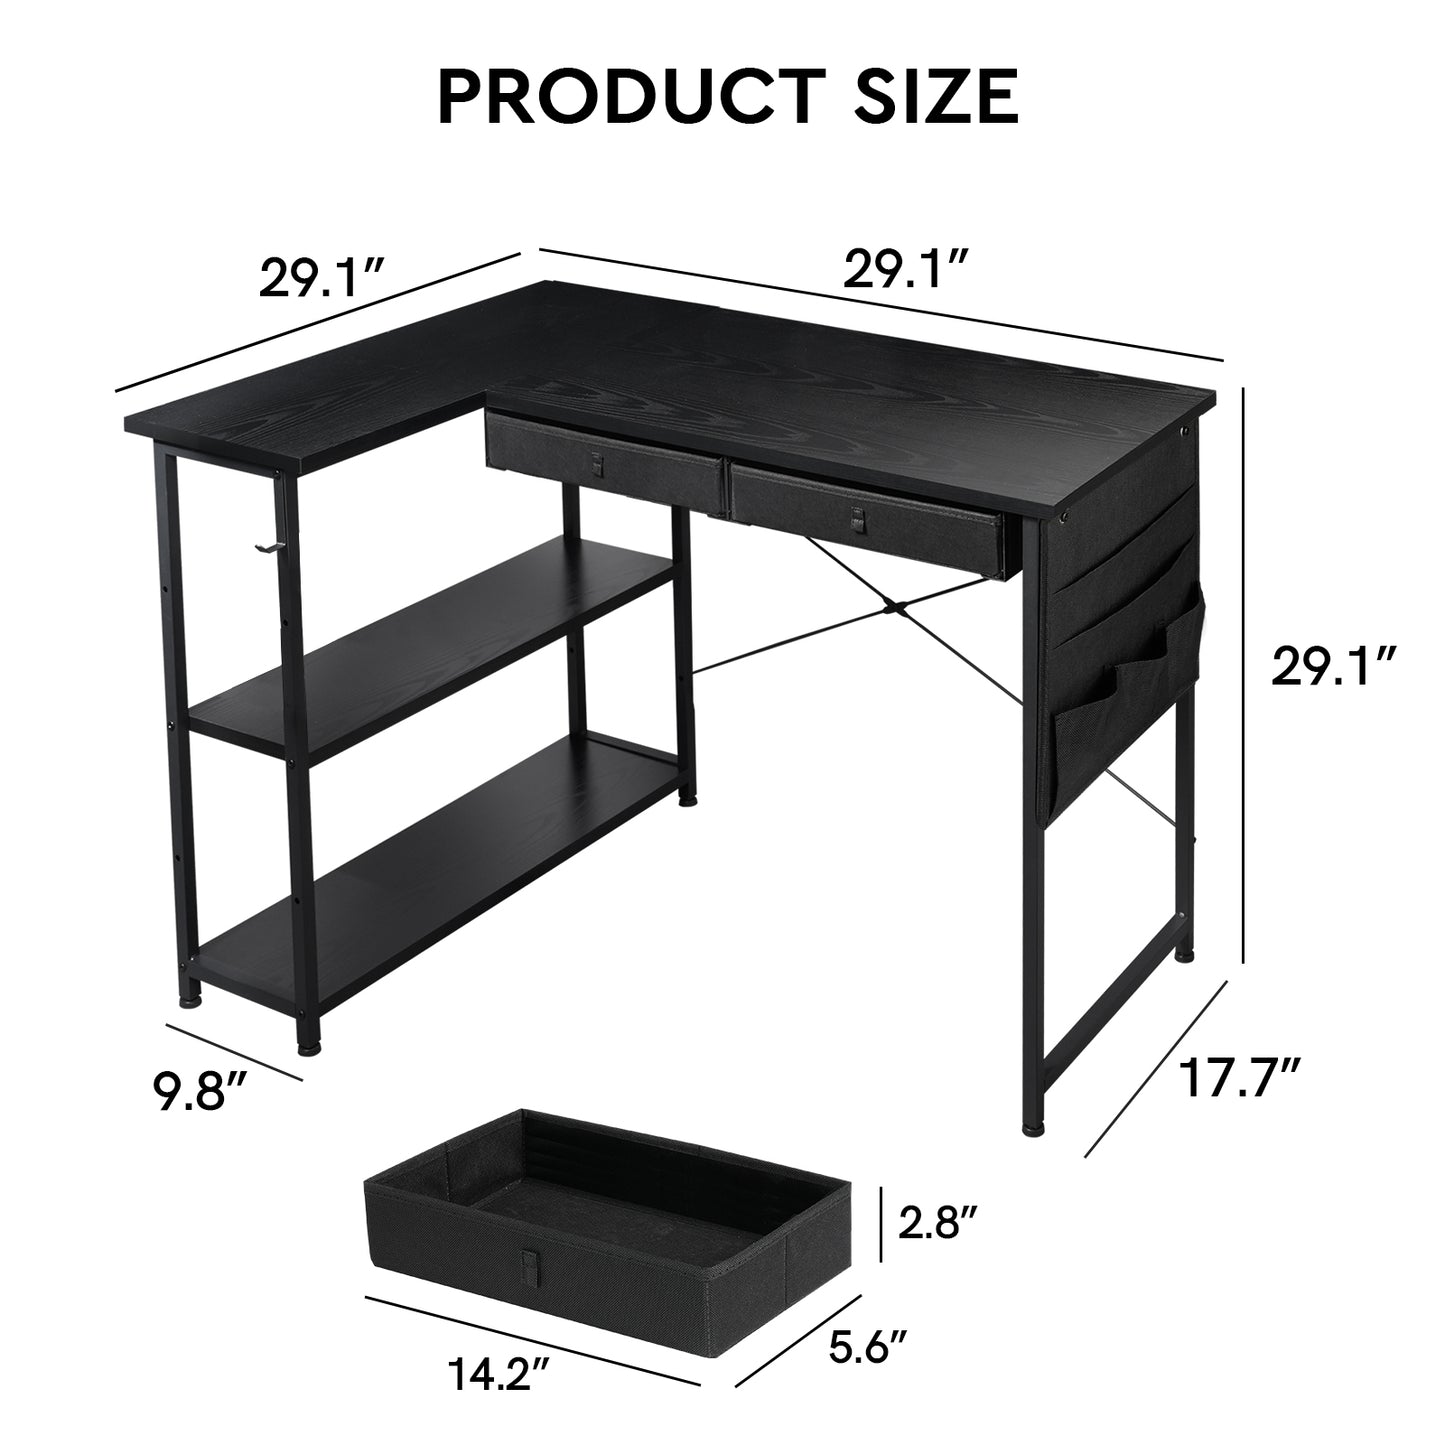 MAIHAIL 39 inch L Shaped Desk, Black